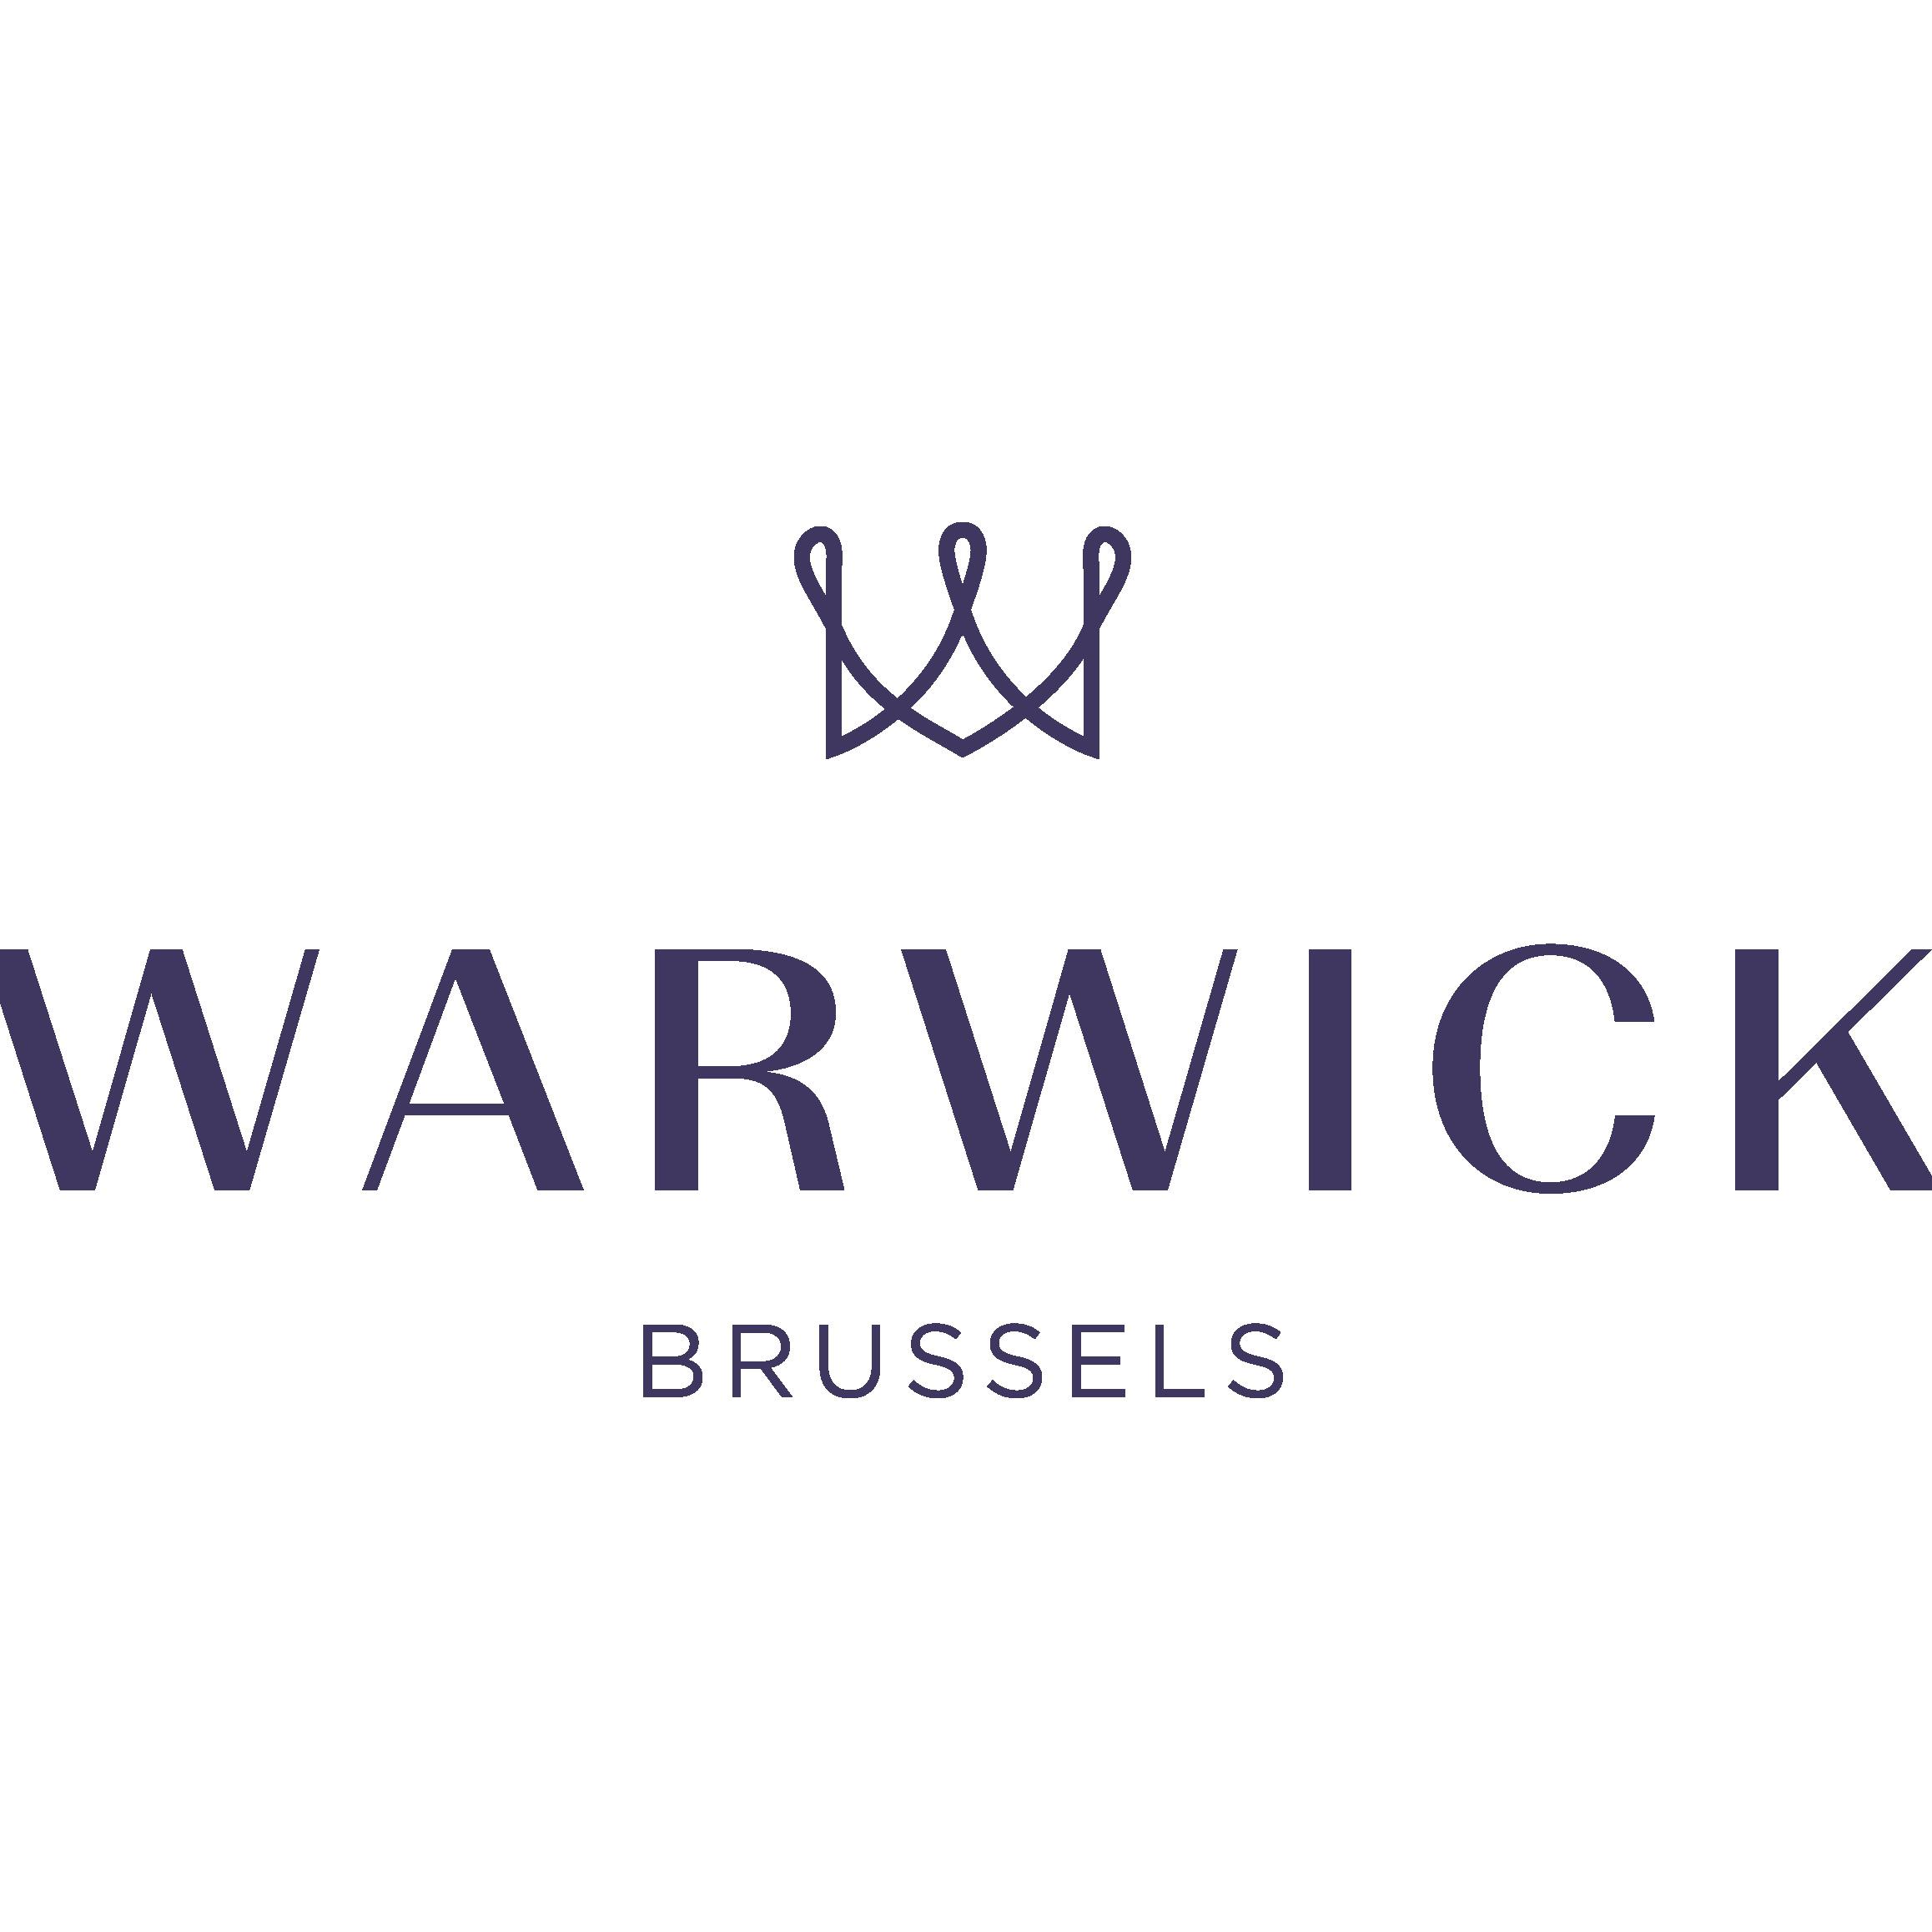 Warwick Brussels - Hotel - Brussels - 02 505 55 55 Belgium | ShowMeLocal.com